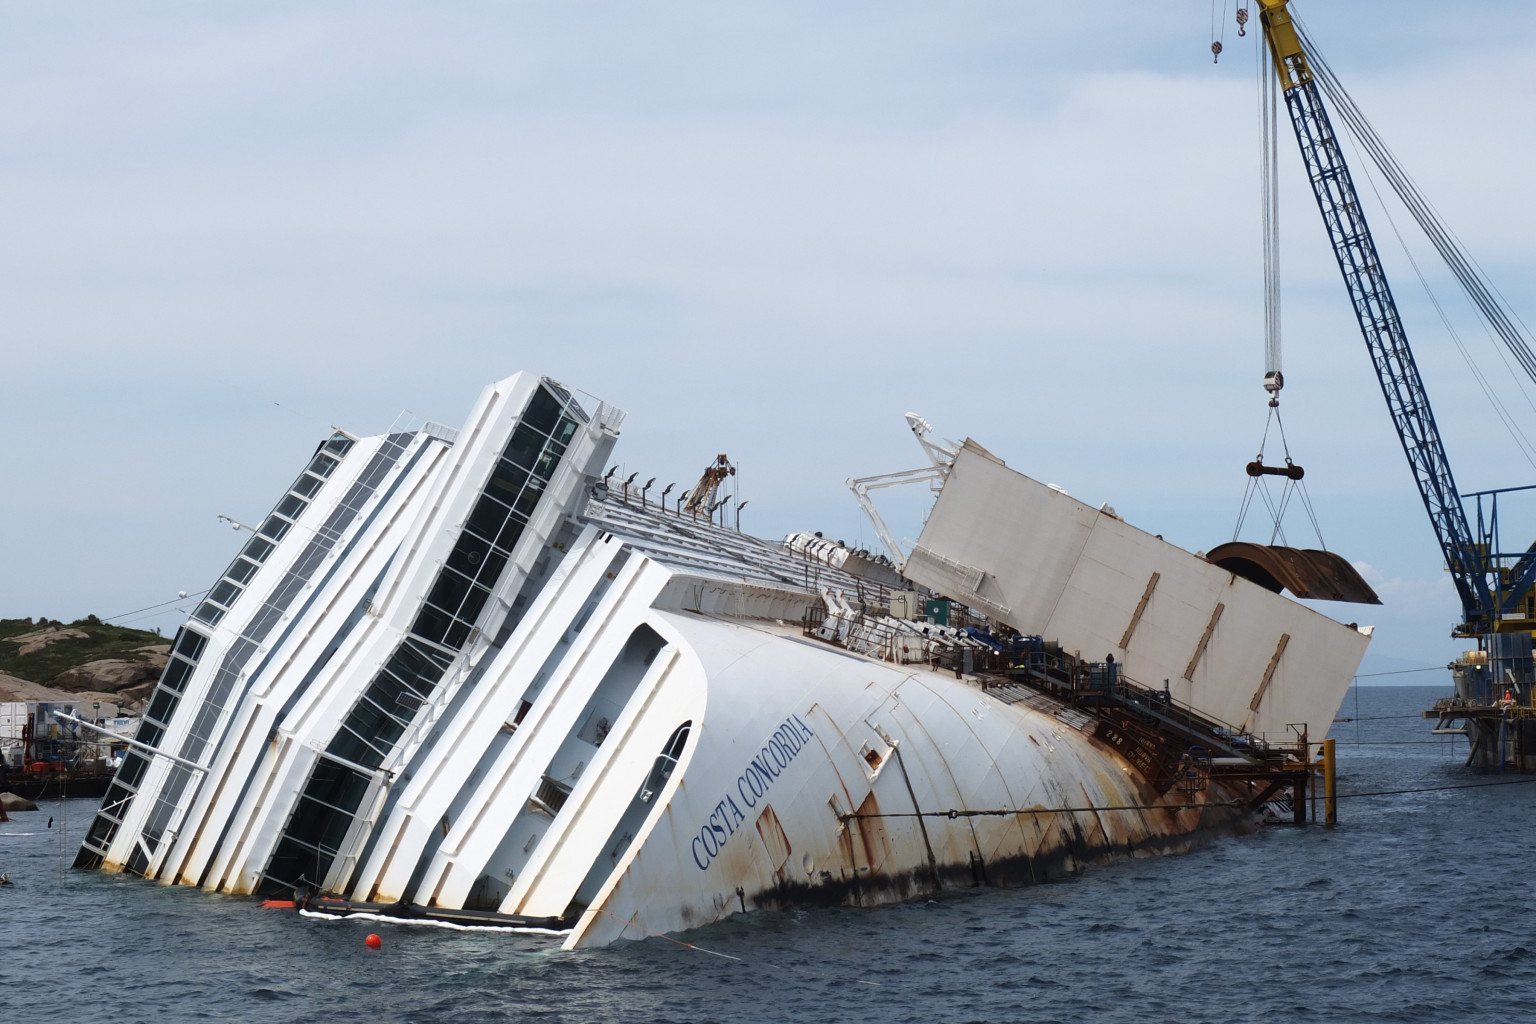 cruise ship sinking off italy